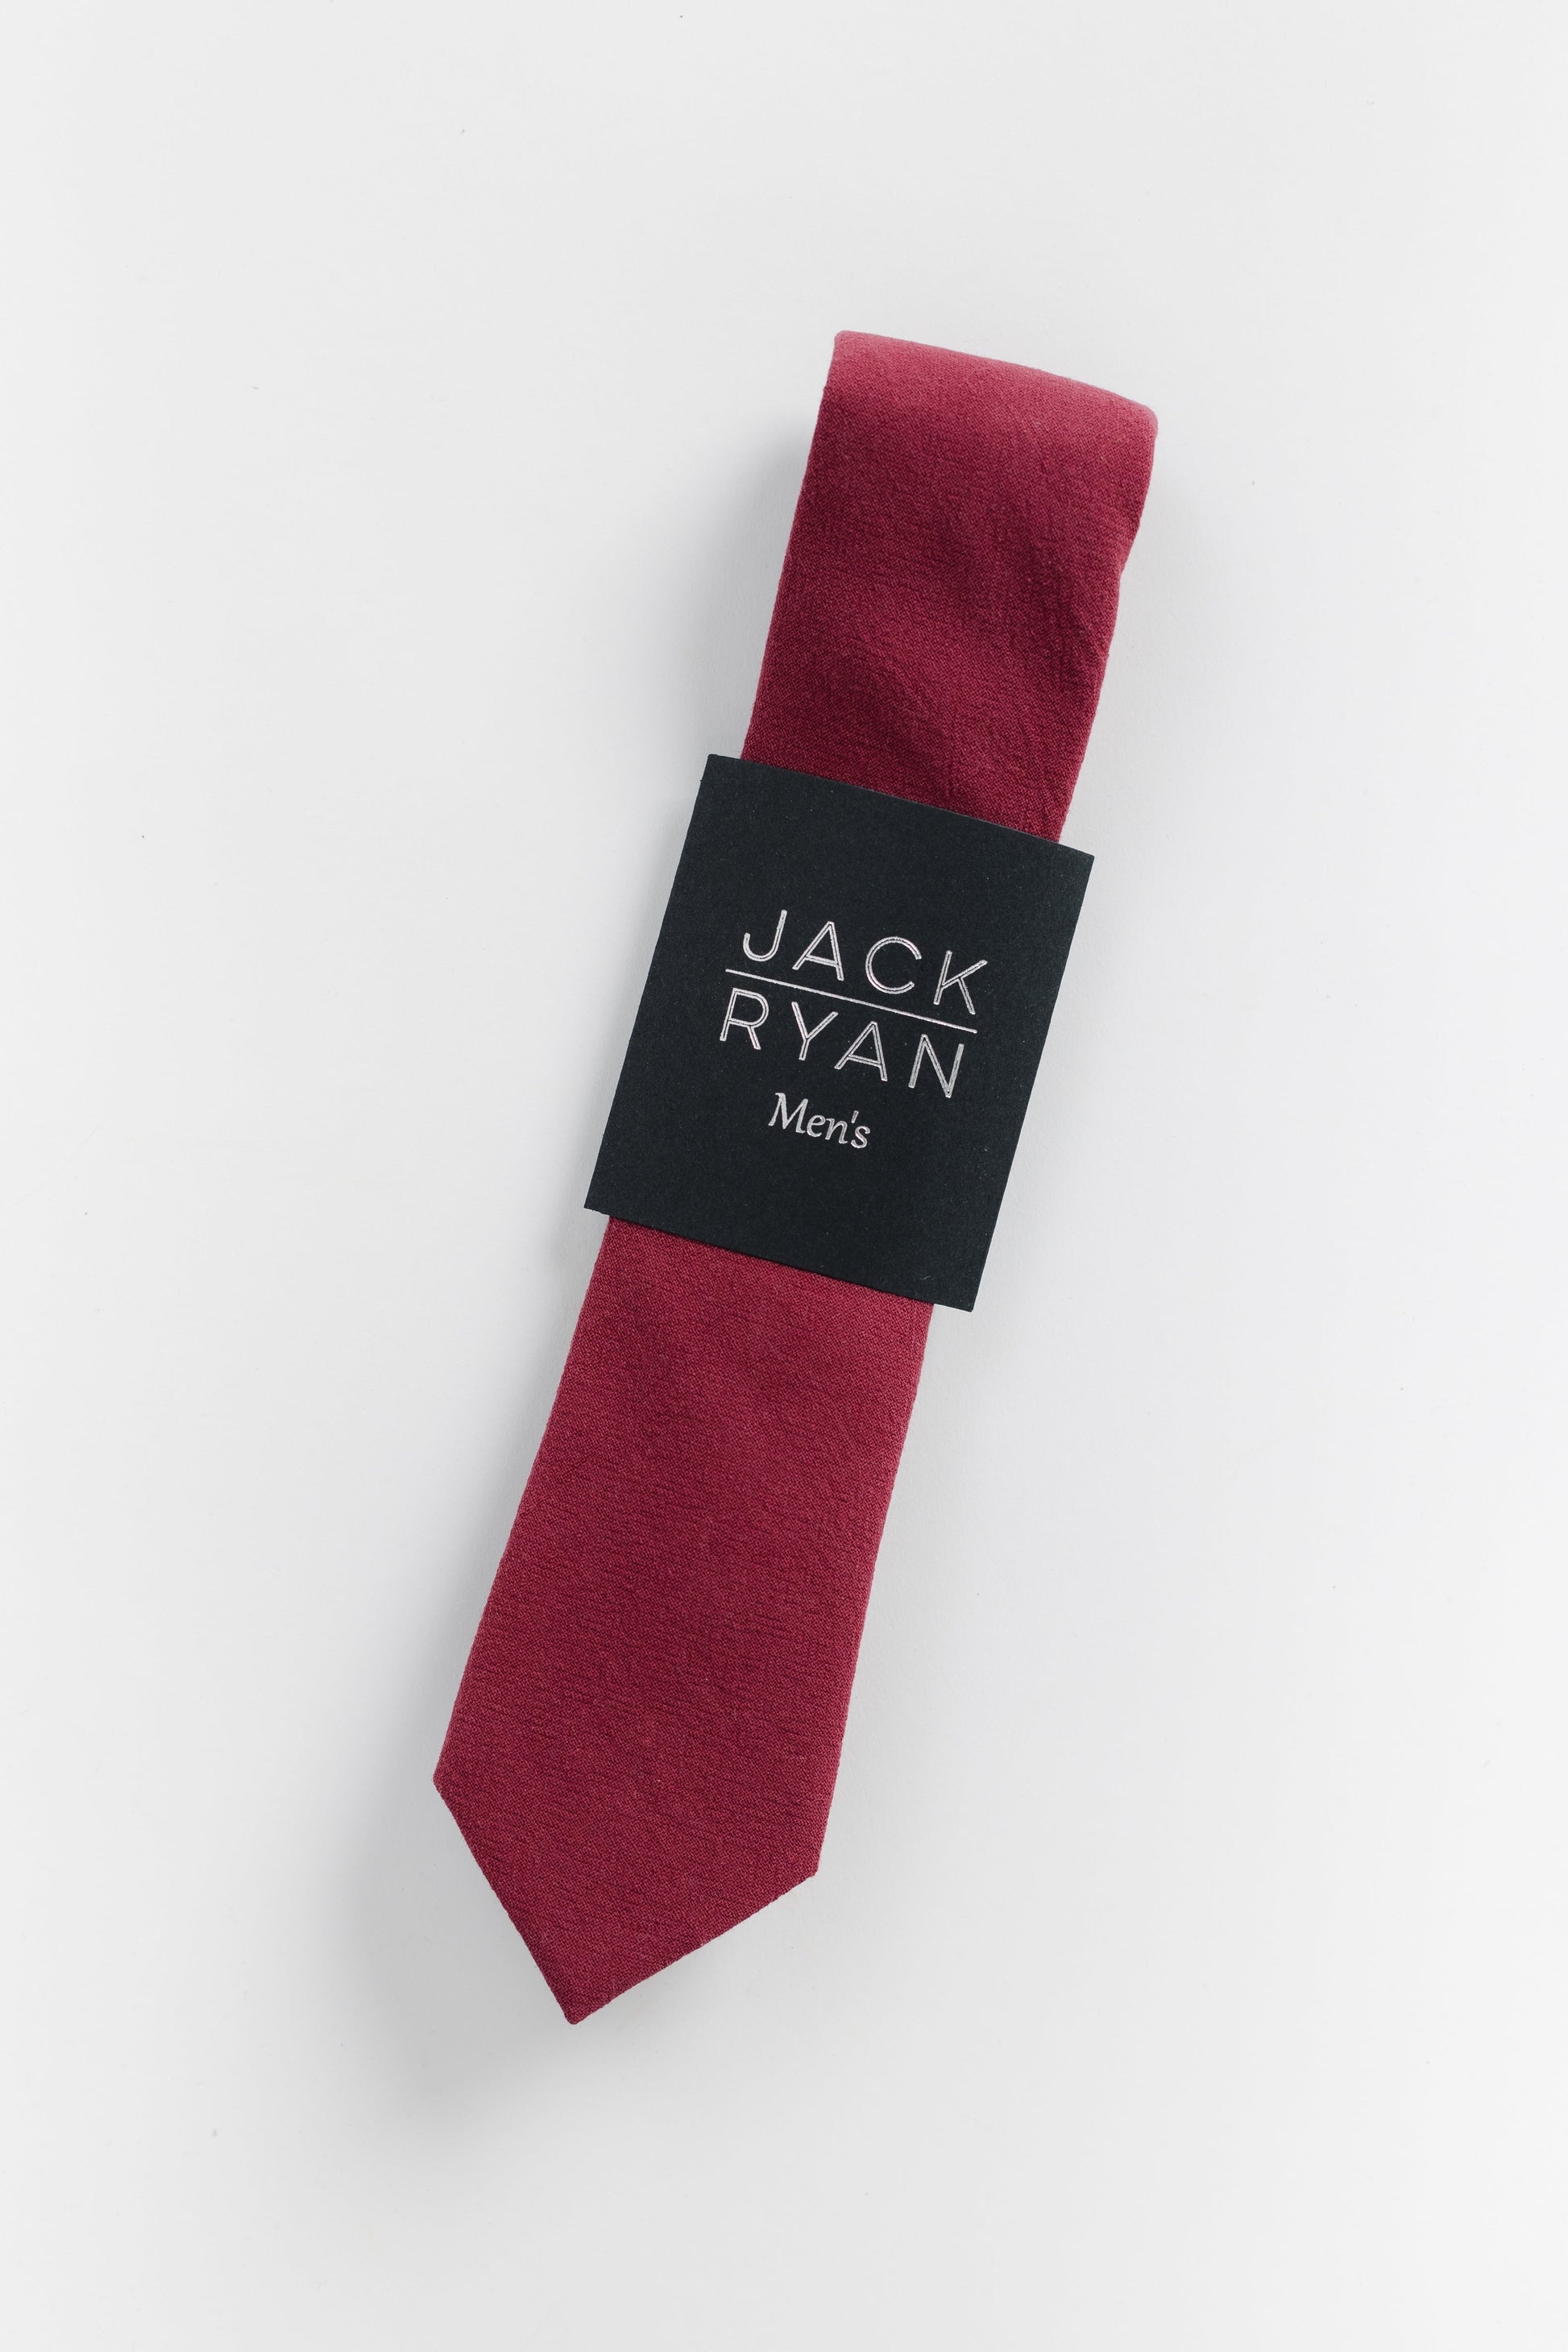 Jack Ryan Solid Collection MEN'S TIE JACK RYAN Wine 58"L x 2.25"W 